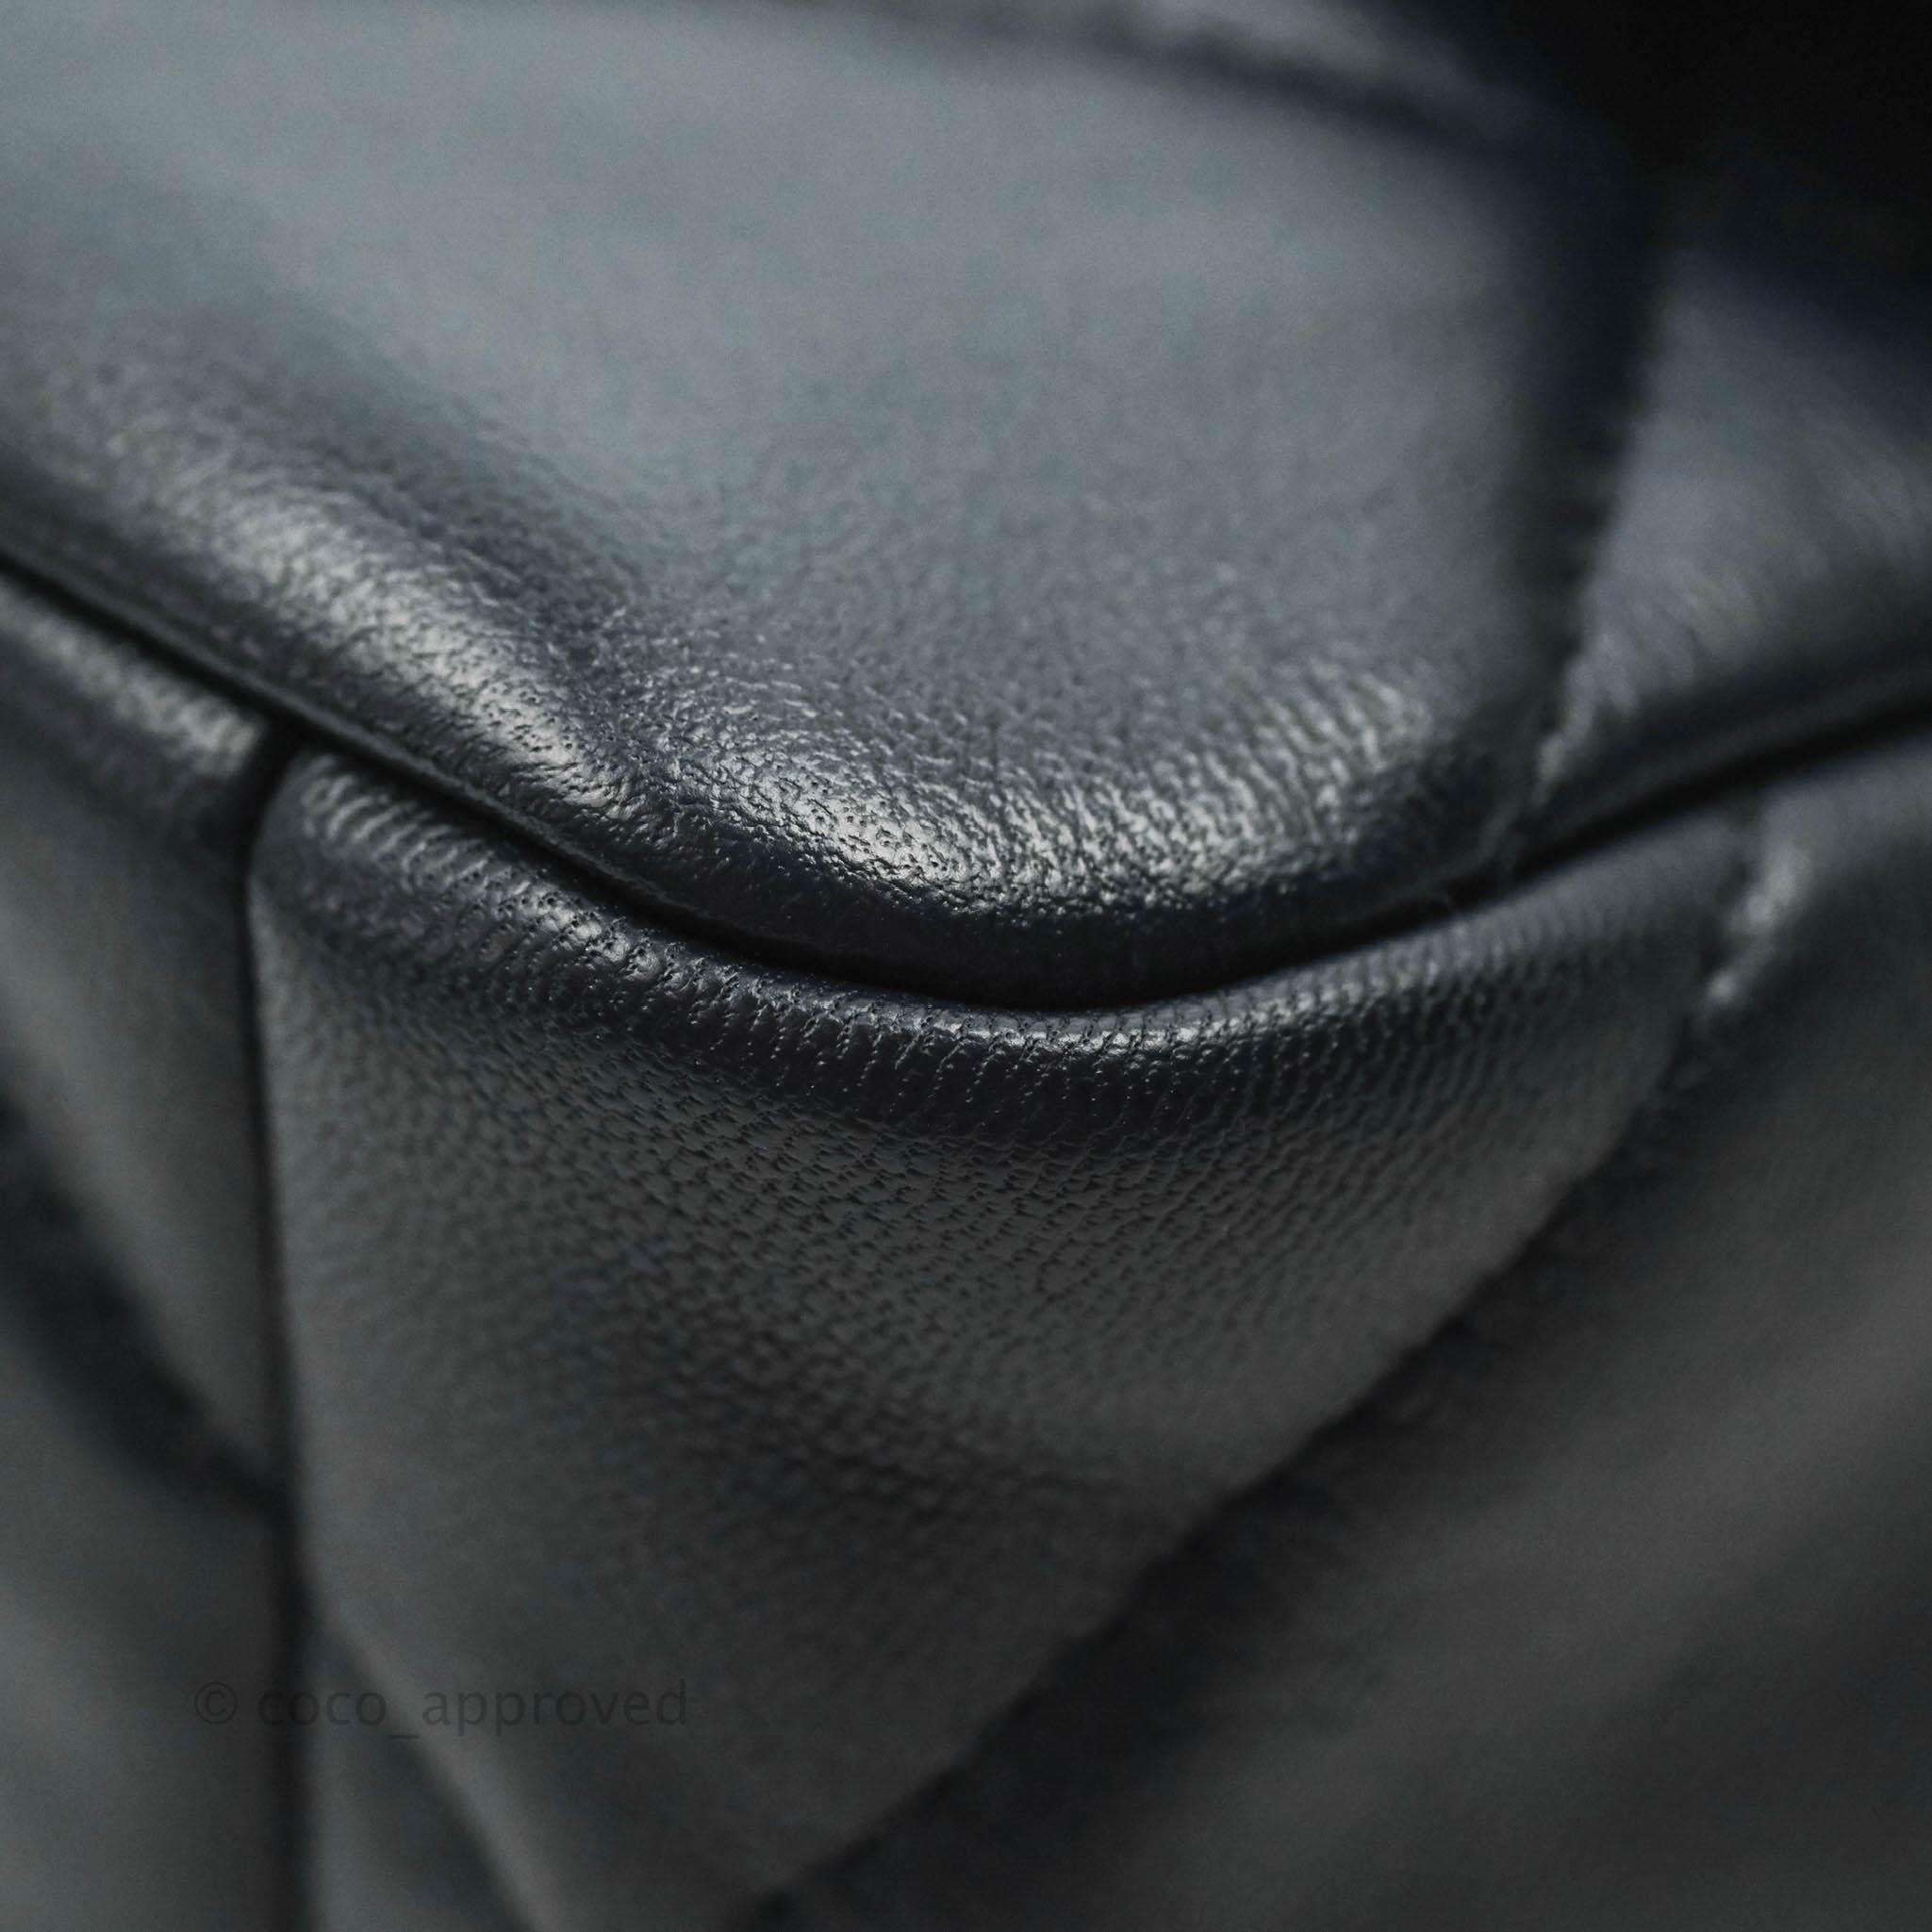 Chanel 19 Small, White Leather with Black/Dark Blue Hardware, New in Box  WA001